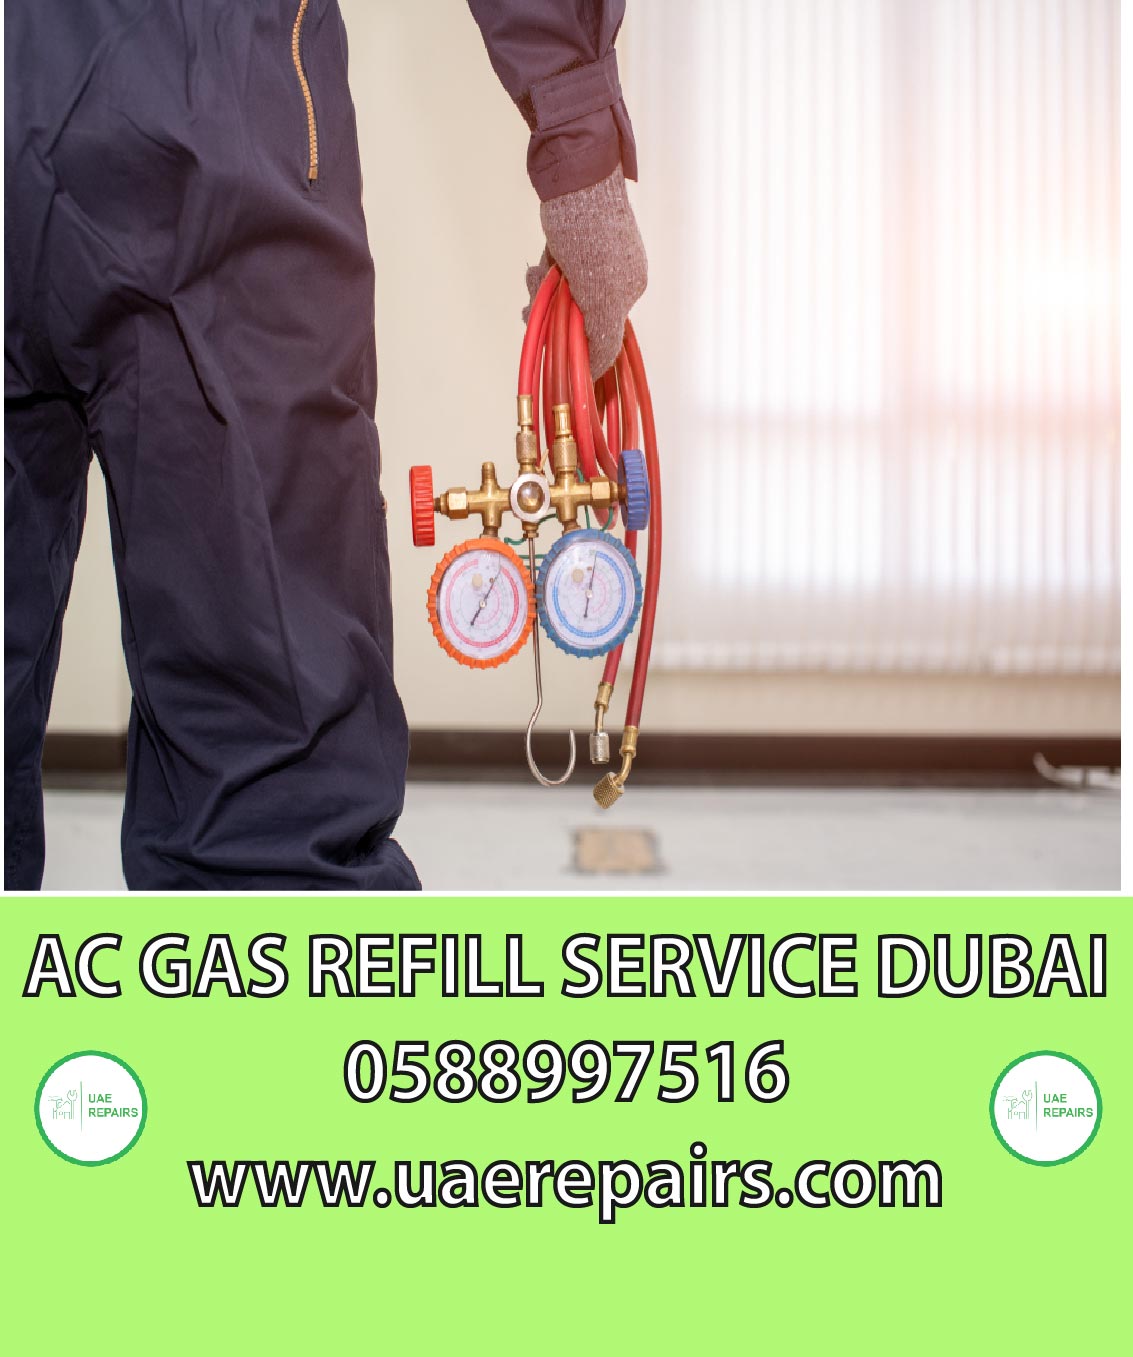 UAE REPAIRS AC GAS REFILL MAINTAIN DUBAI CONTACT US 0588997516